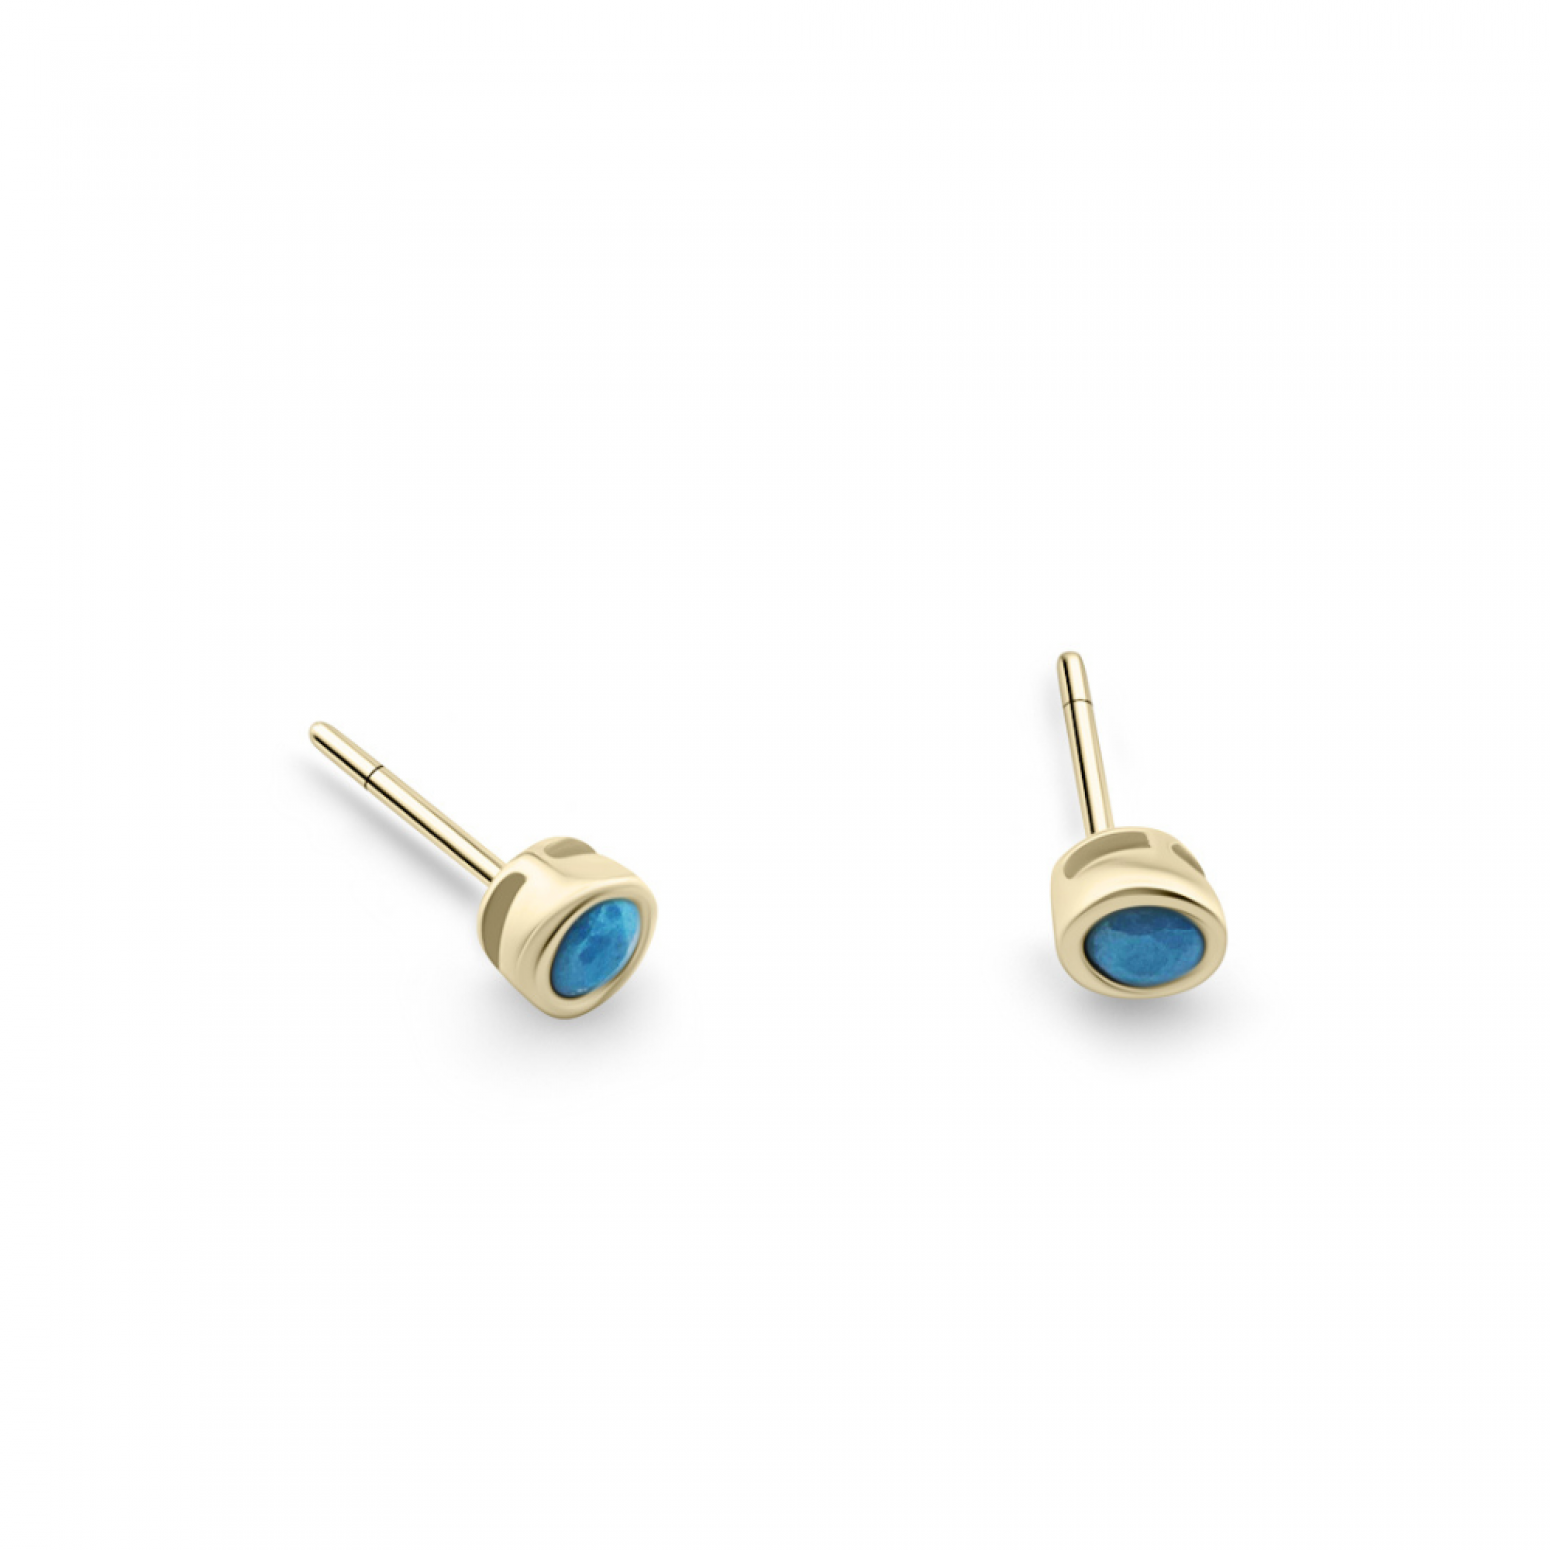 Earrings K9 gold with turquoise, sk4142 EARRINGS Κοσμηματα - chrilia.gr